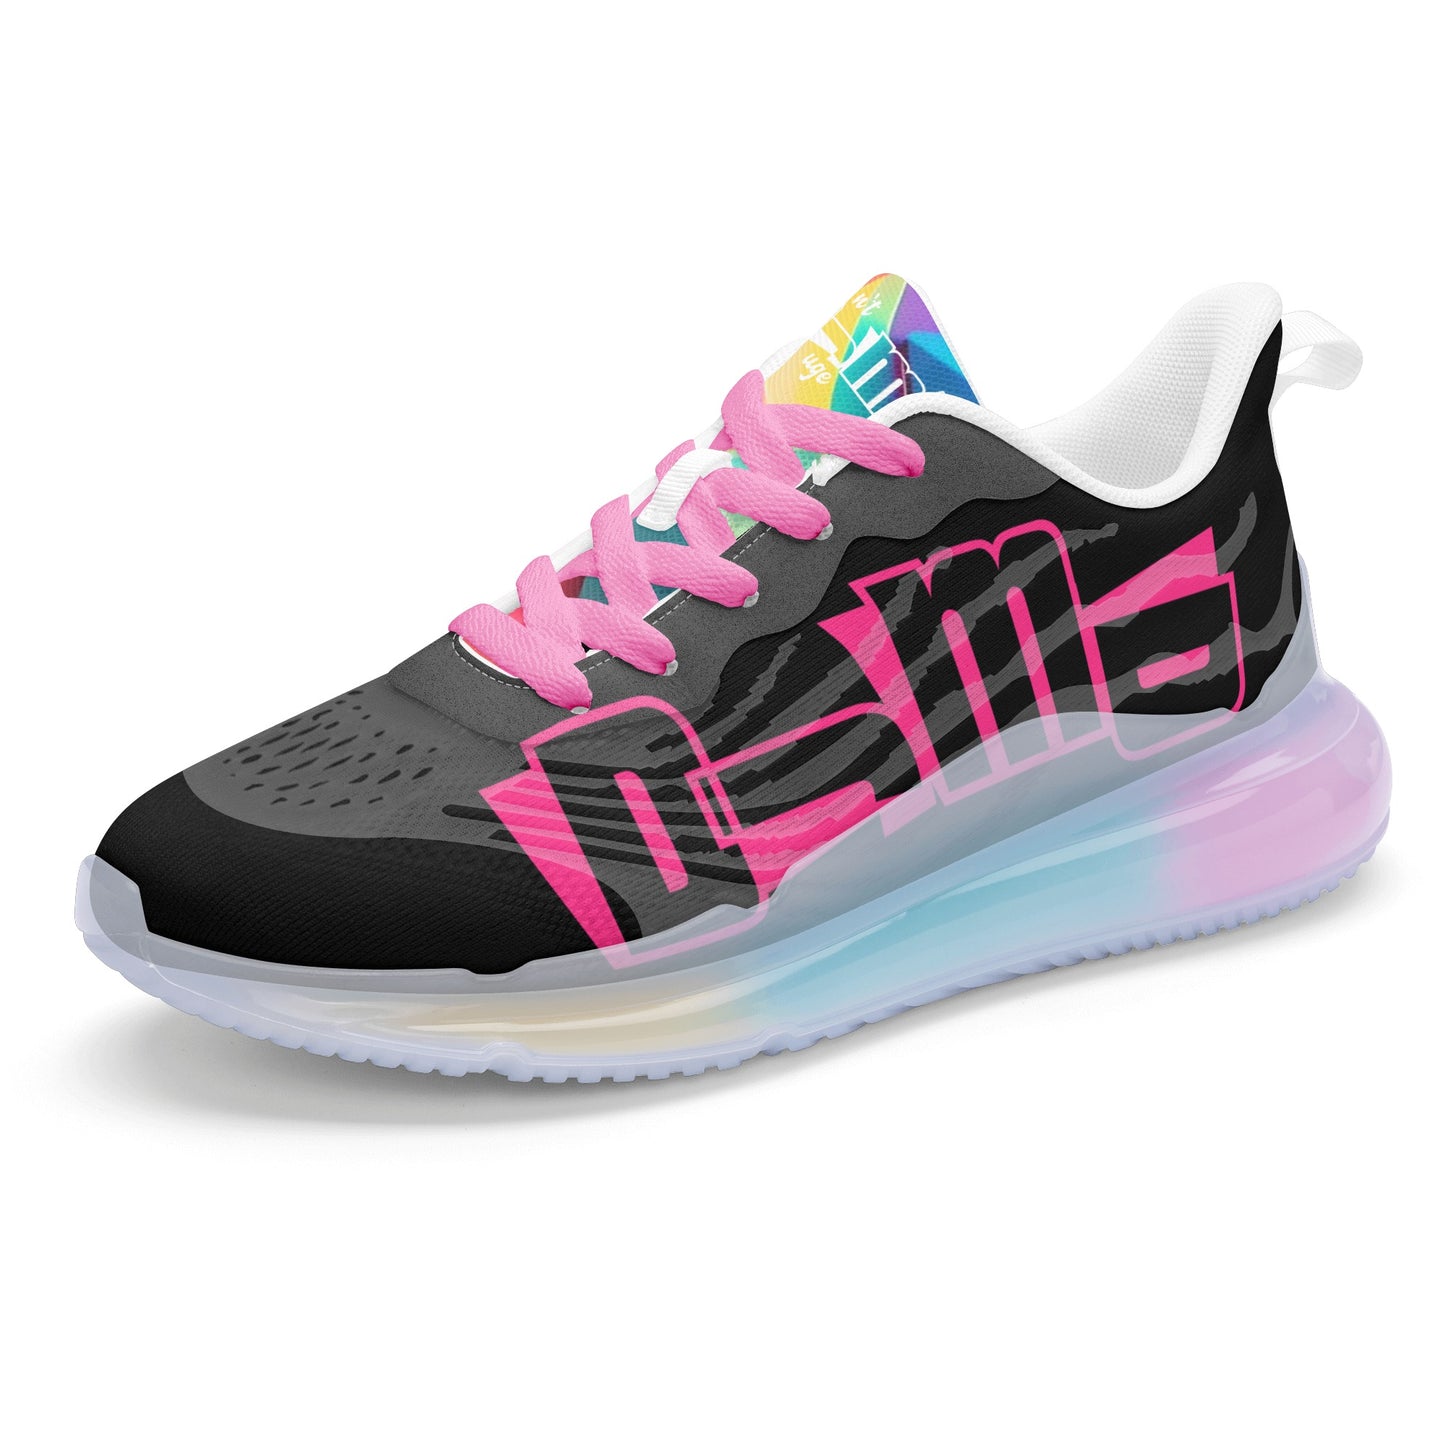 DJMD Womens Rainbow Atmospheric Cushion Running Shoes